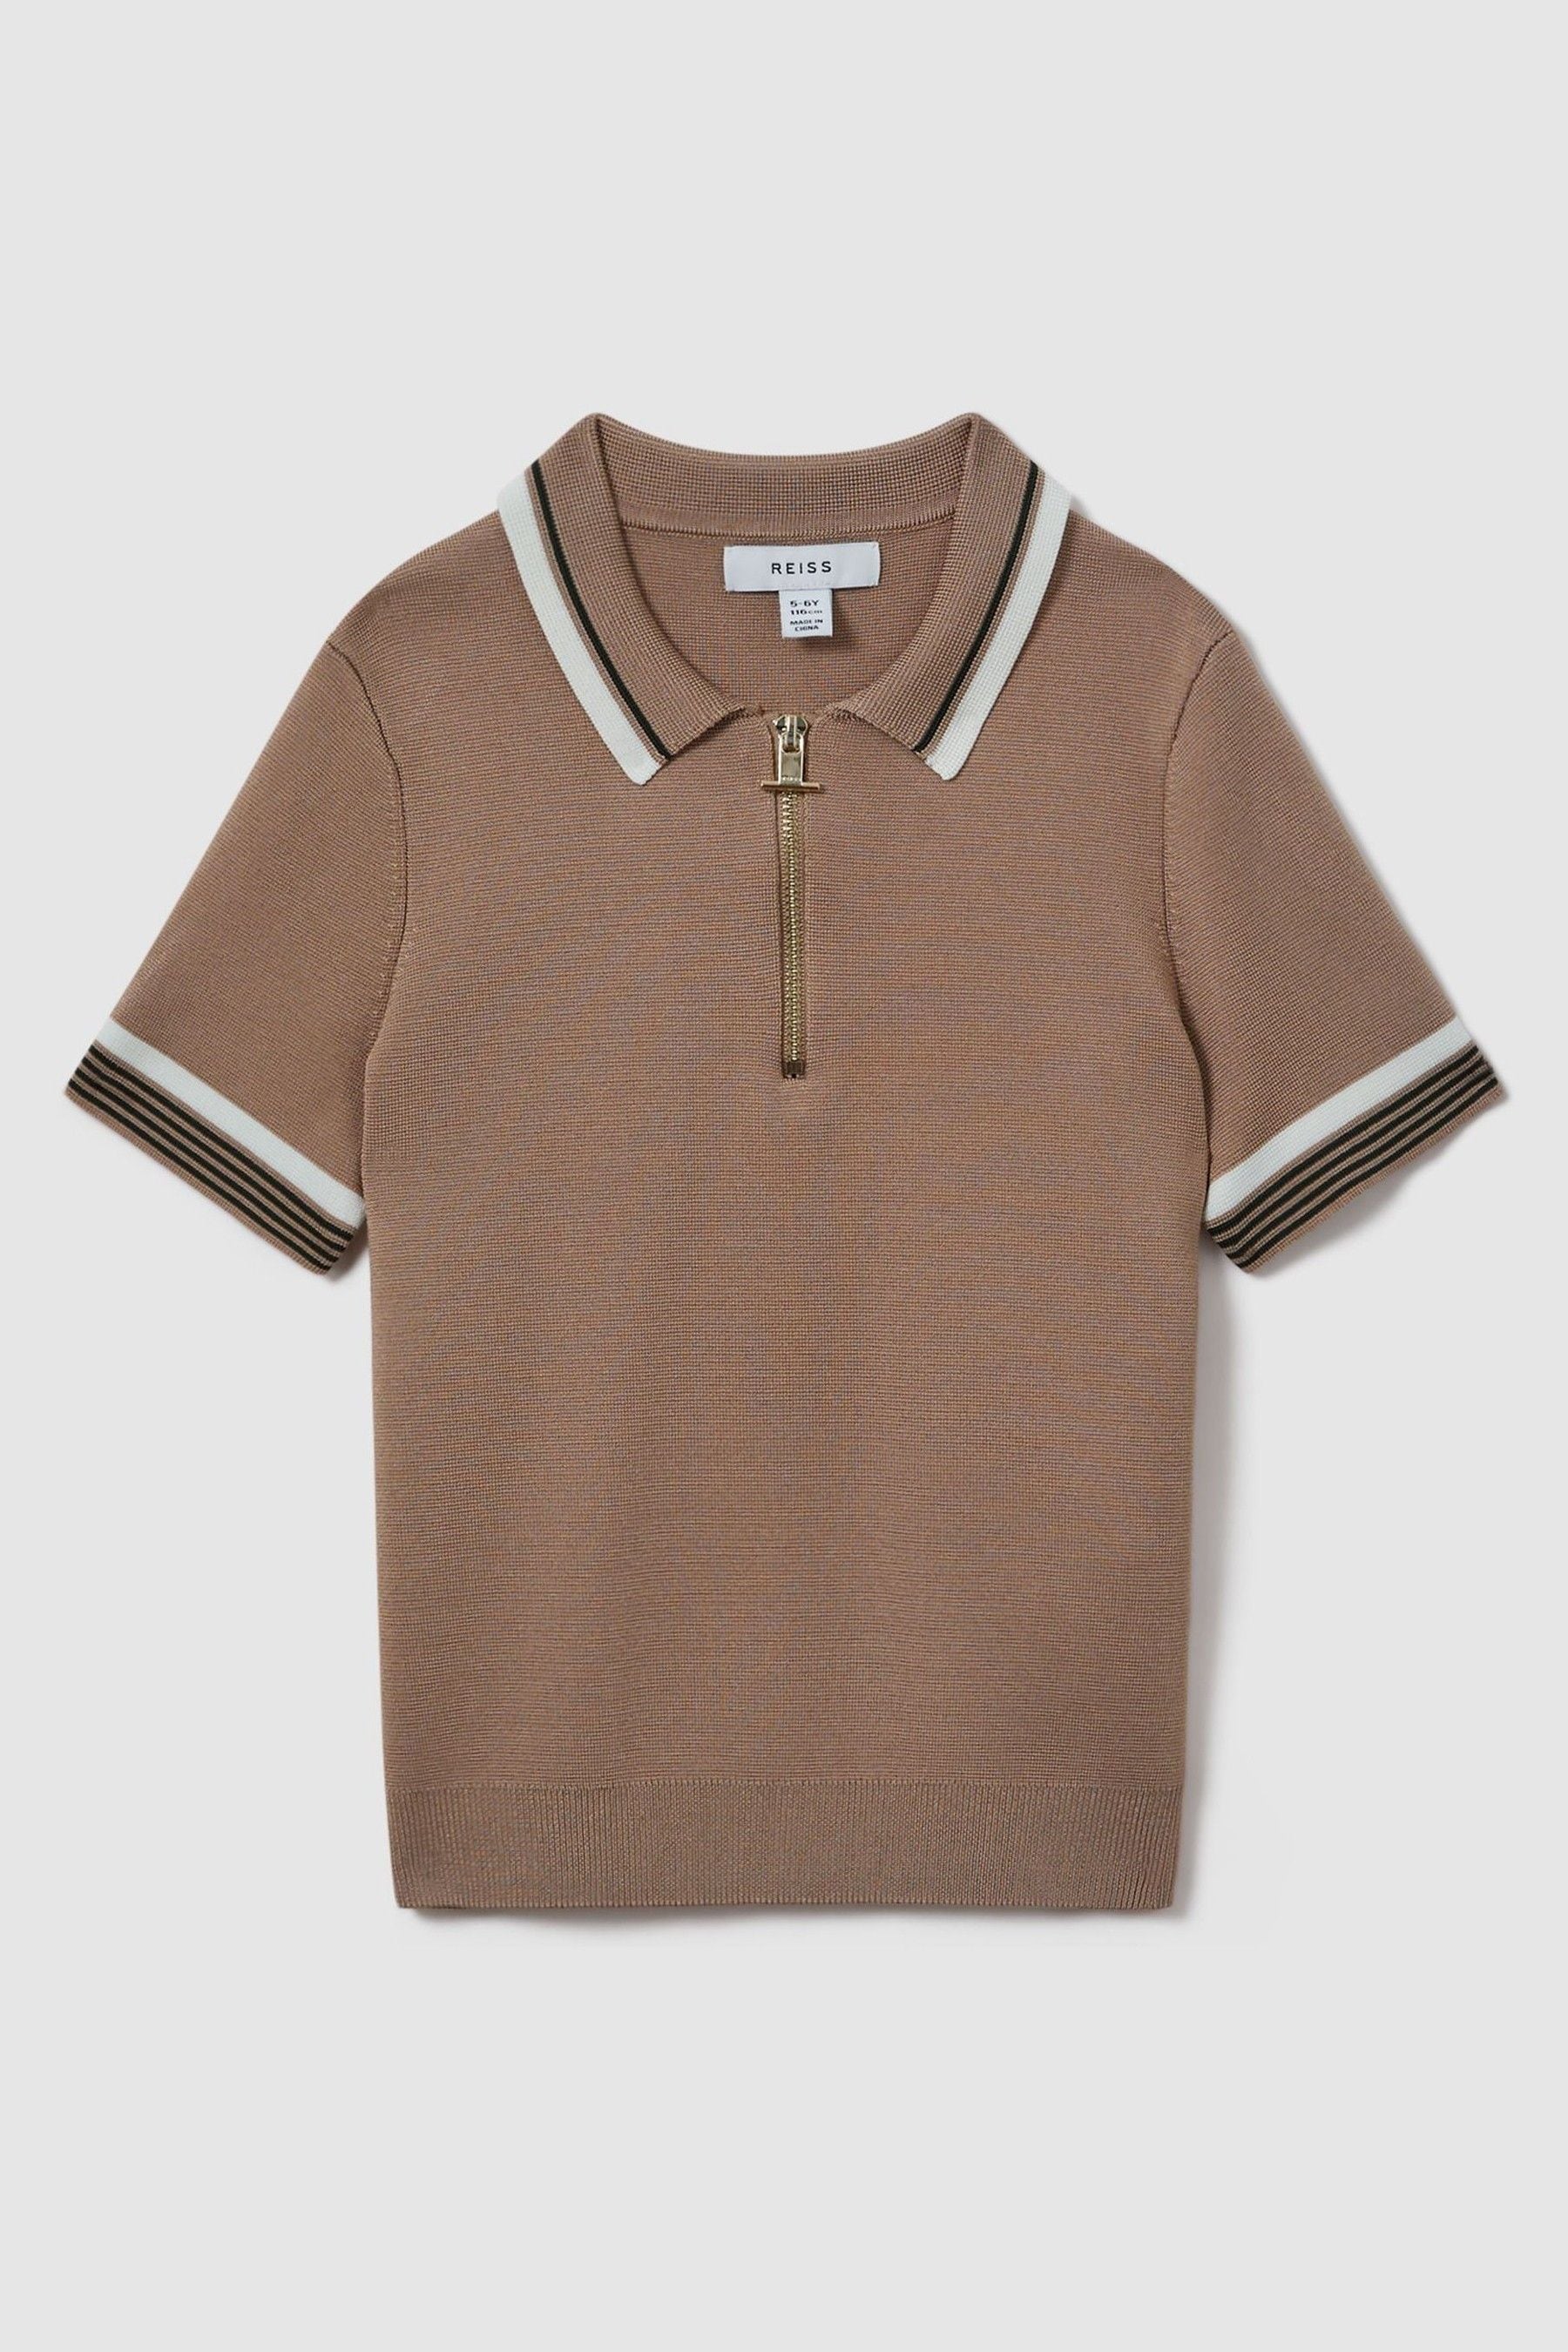 Reiss Kids' Chelsea - Warm Taupe Junior Half-zip Polo Shirt, Age 6-7 Years